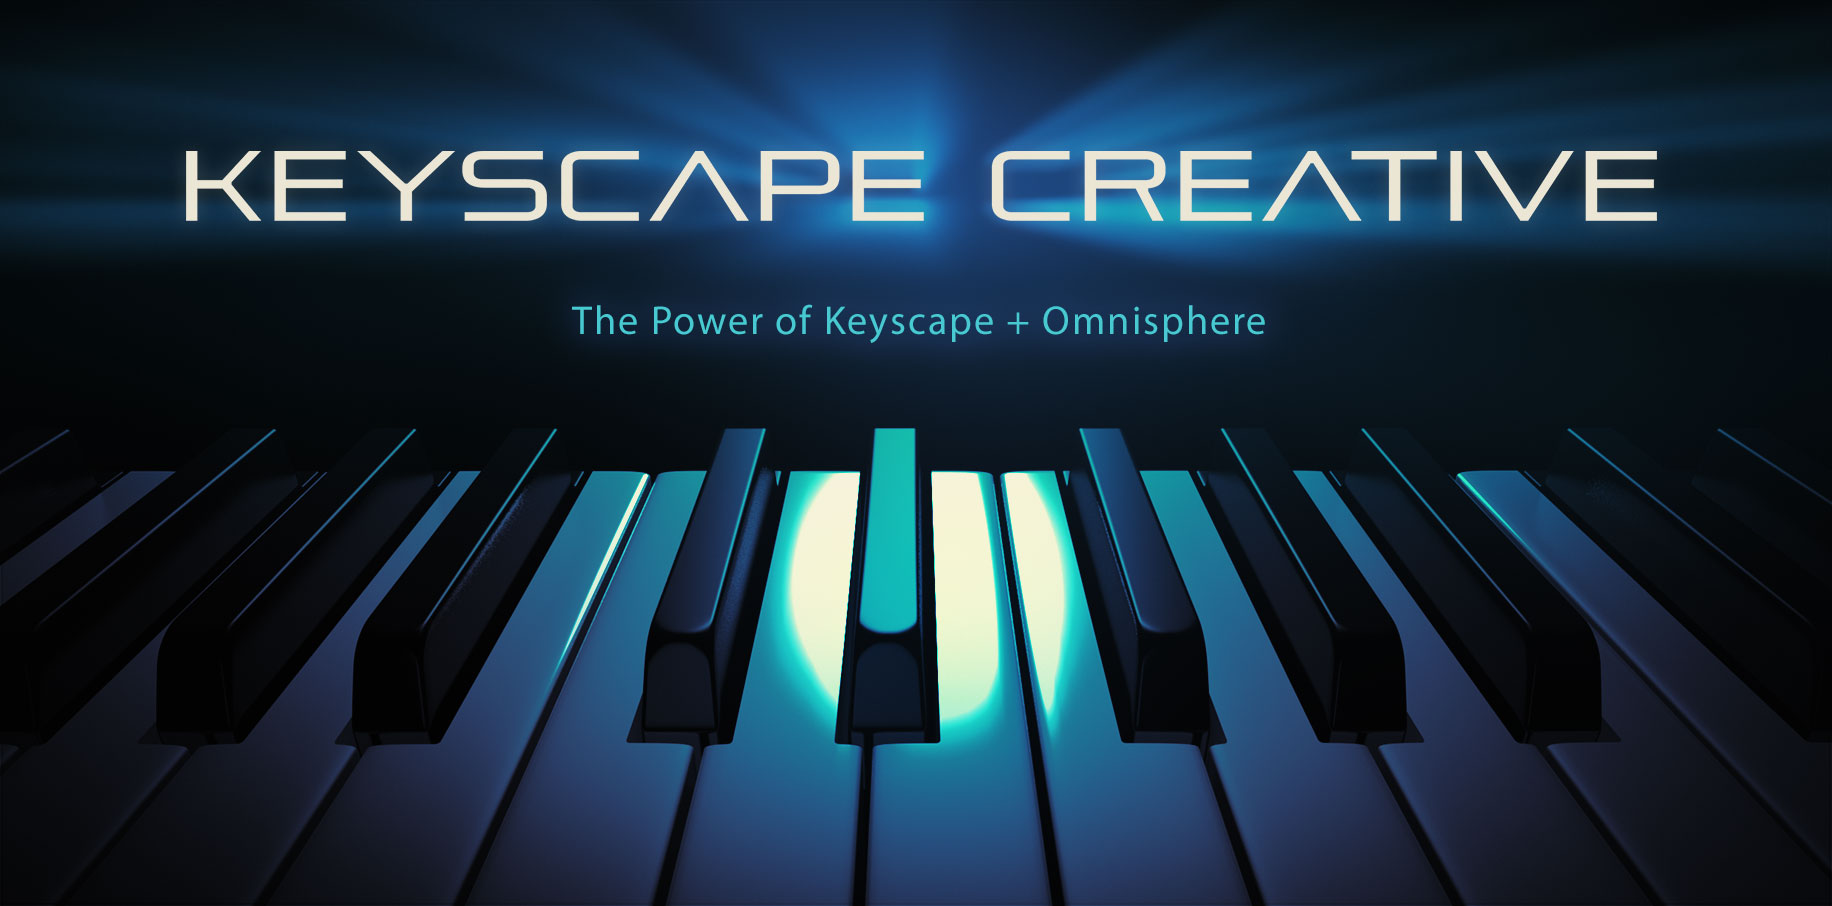 Keyscape Creative Library